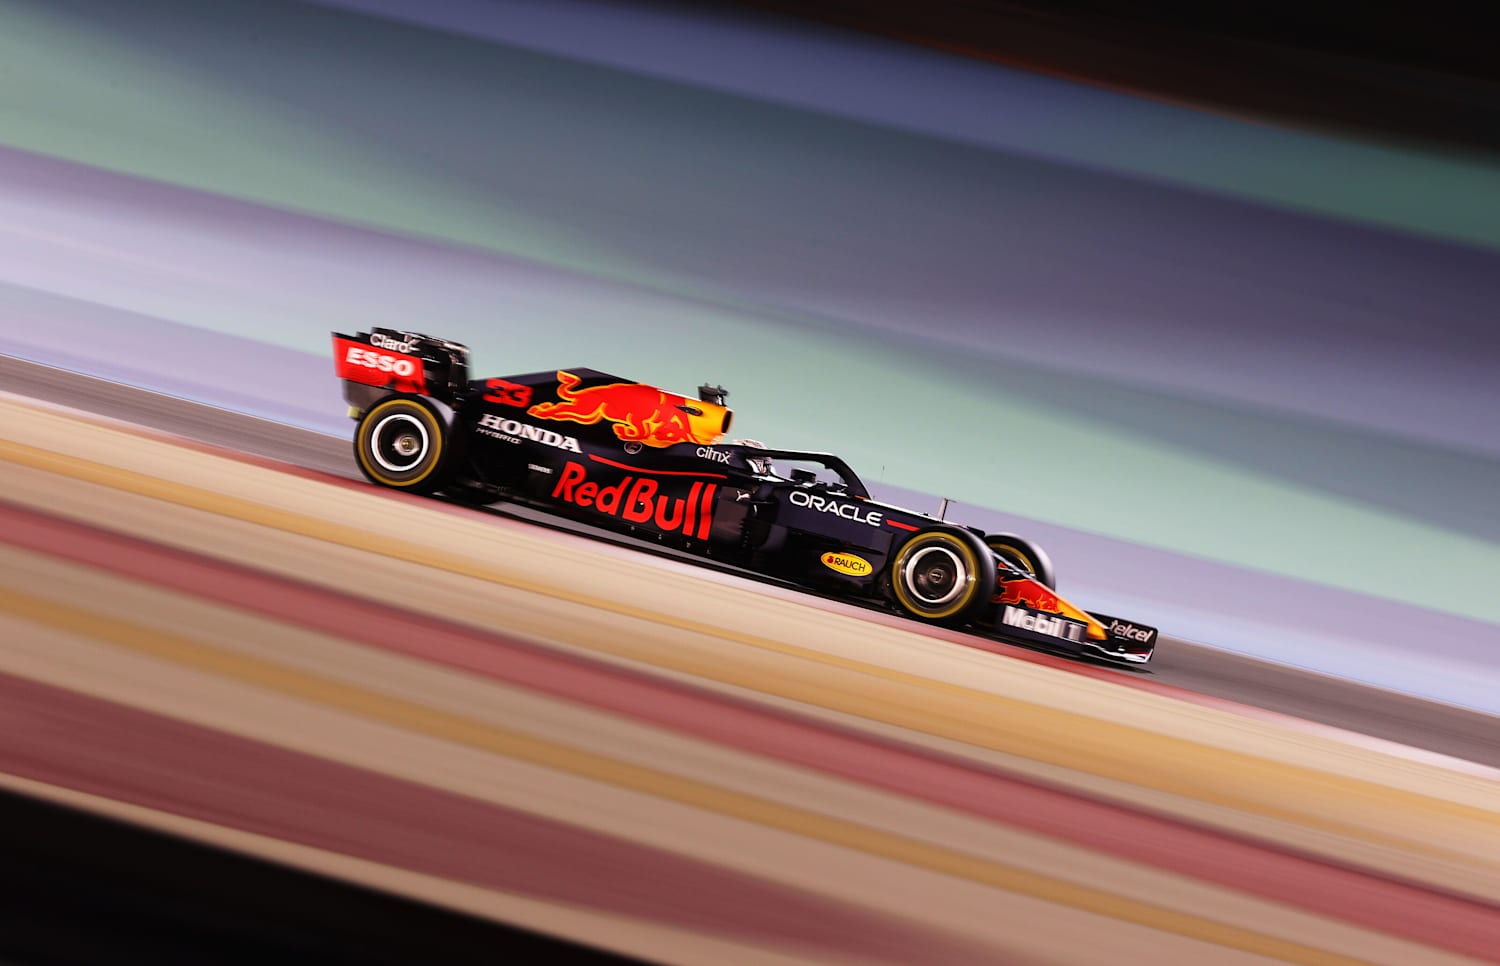 Bahrain Grand Prix 2021: race report